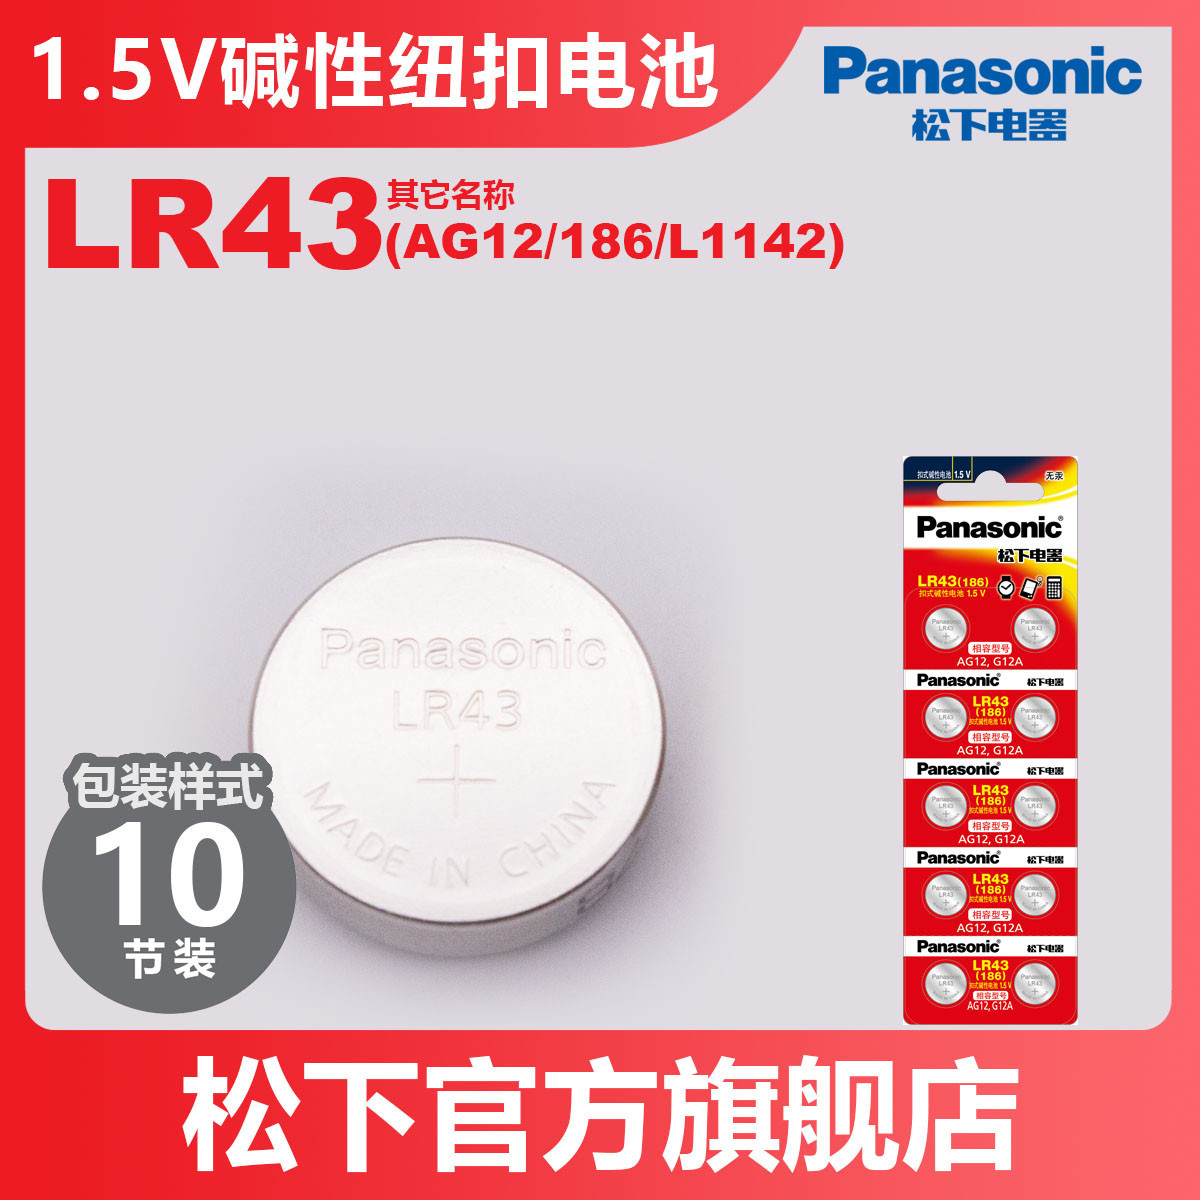 Panasonic松下1.5V碱性纽扣电池钮扣LR43/AG12/386